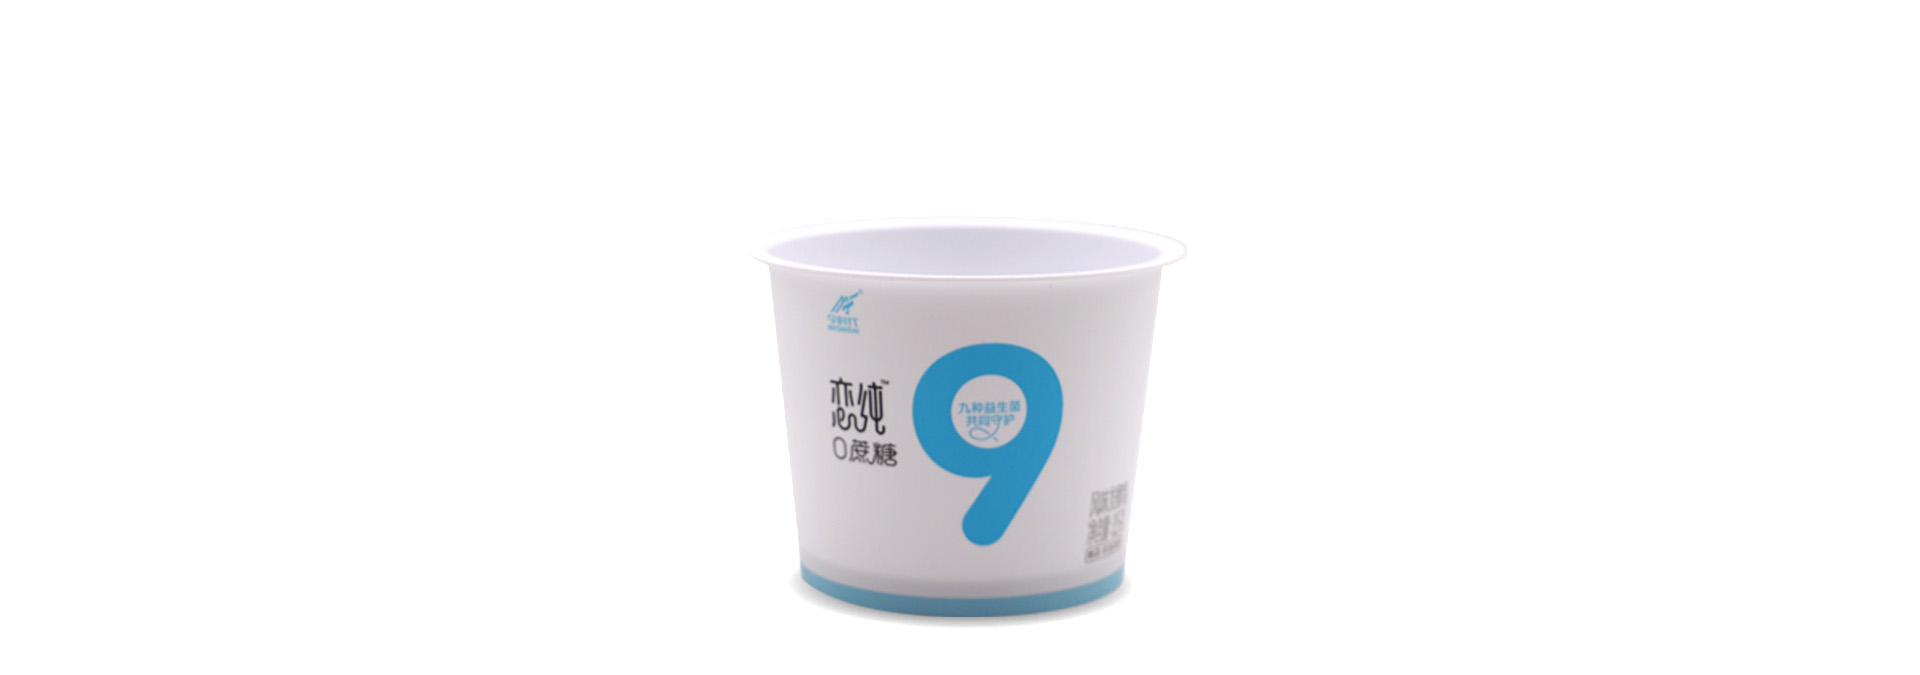 150g yogurt cup (84 caliber)